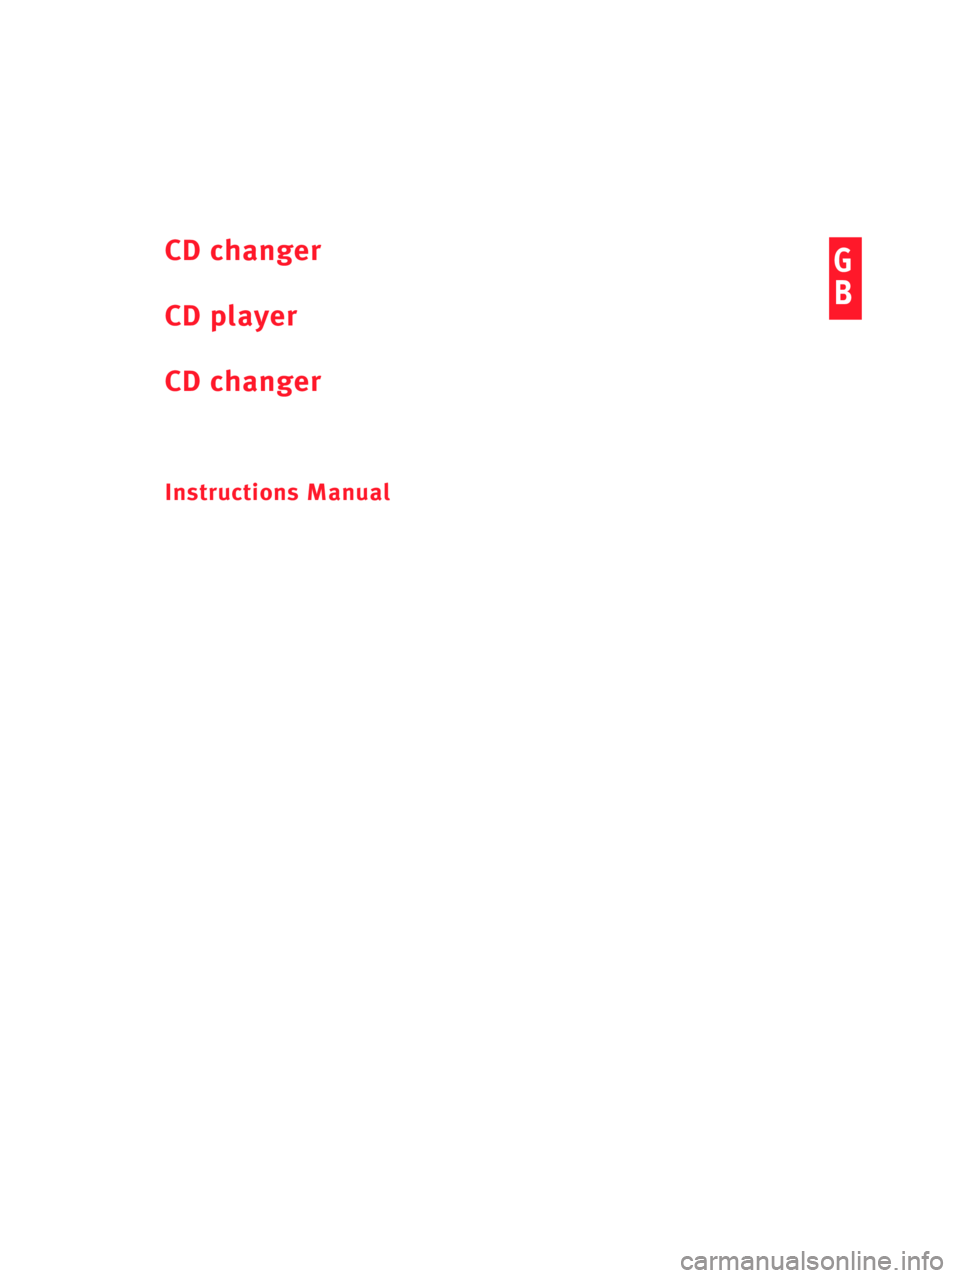 Seat Cordoba 2005  COMPACT DISC G
B
CD changer 
CD player
CD changer
Instructions Manual  